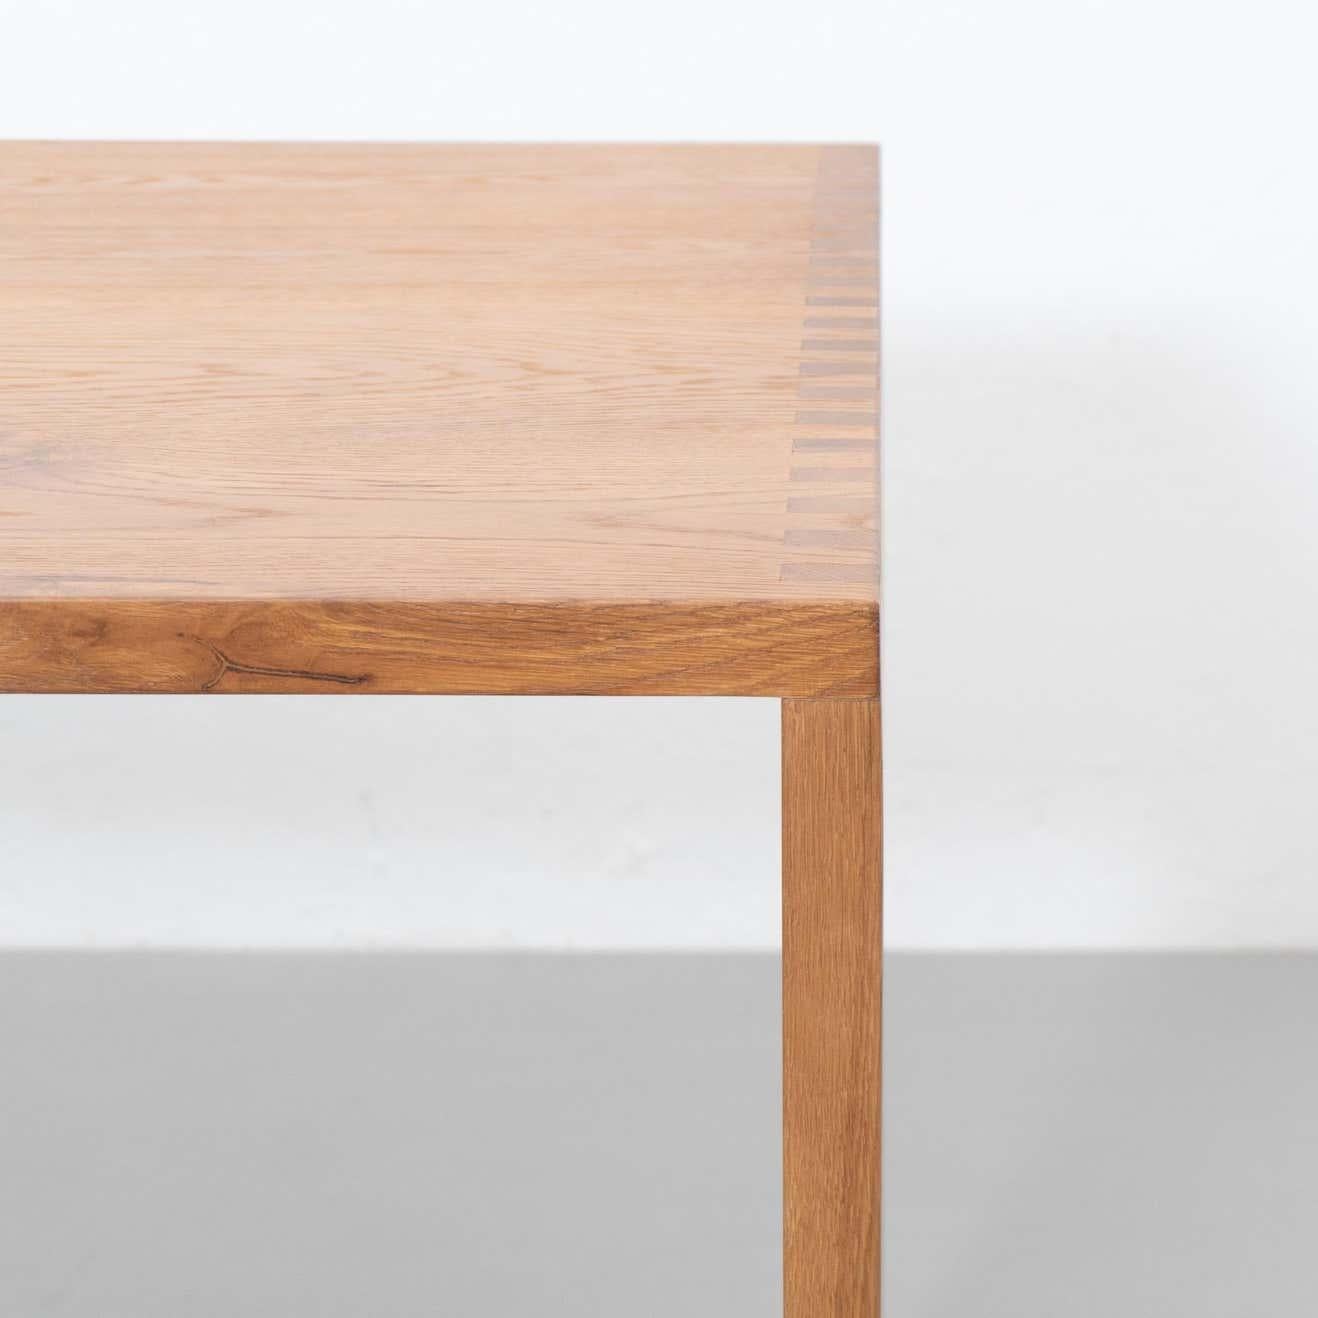 Spanish Dada Est. Contemporary Solid Oak Dining Table